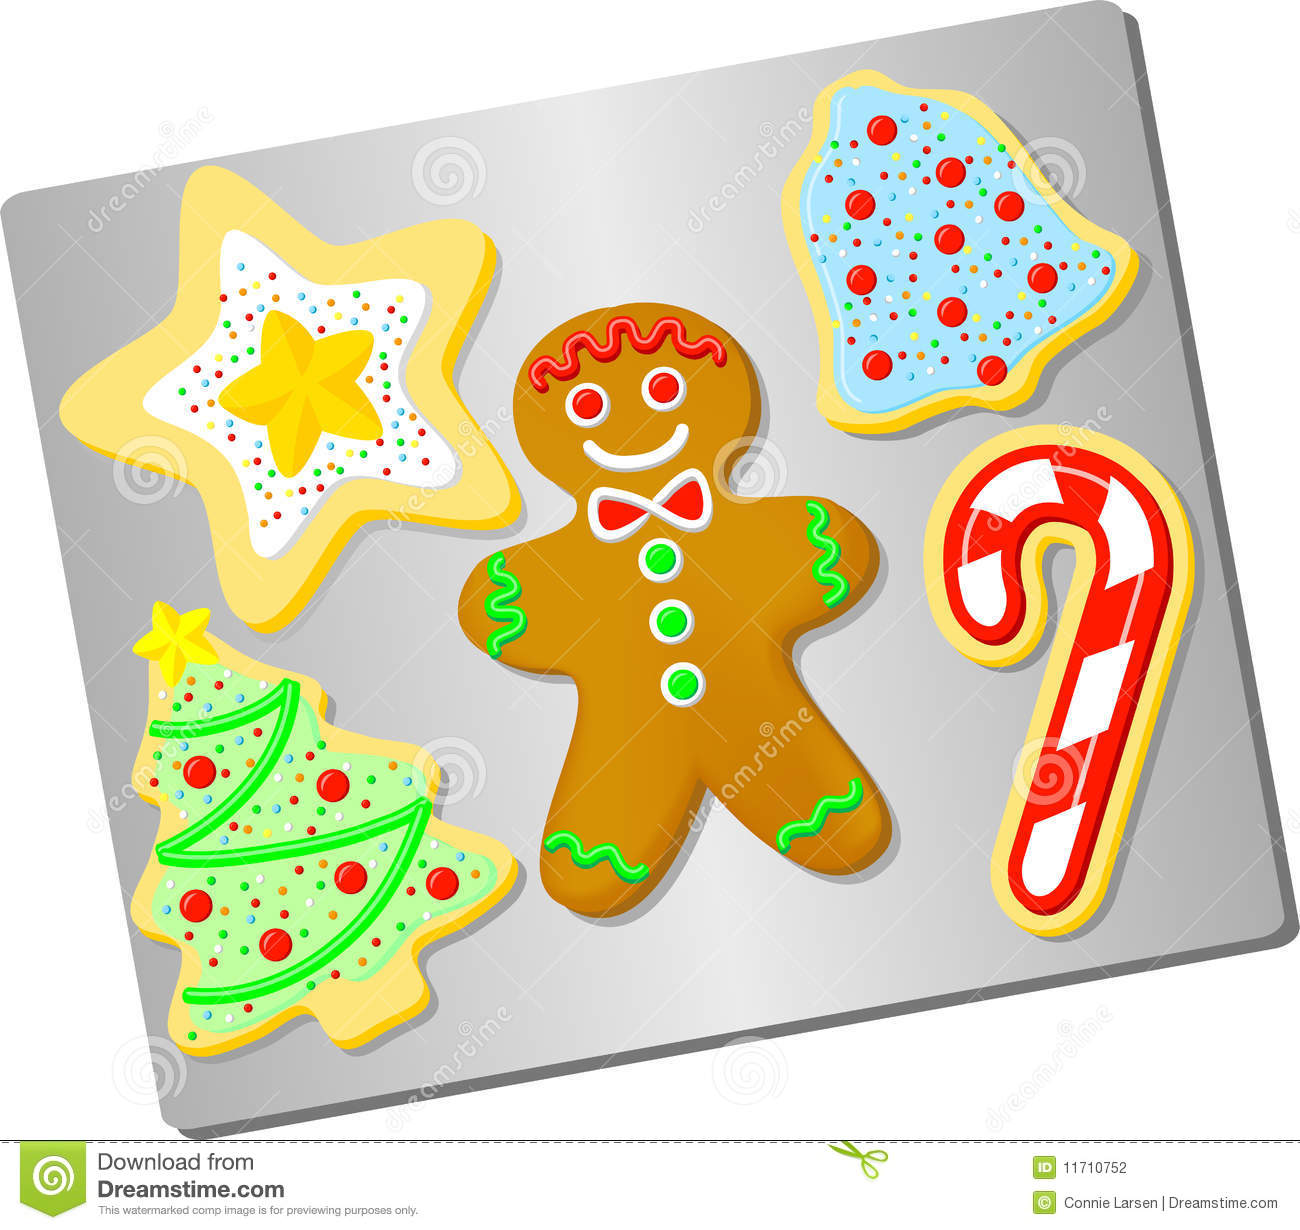 Halloween Clip Art Images Cut Out Sugar Cookies Christmas Cookiesai